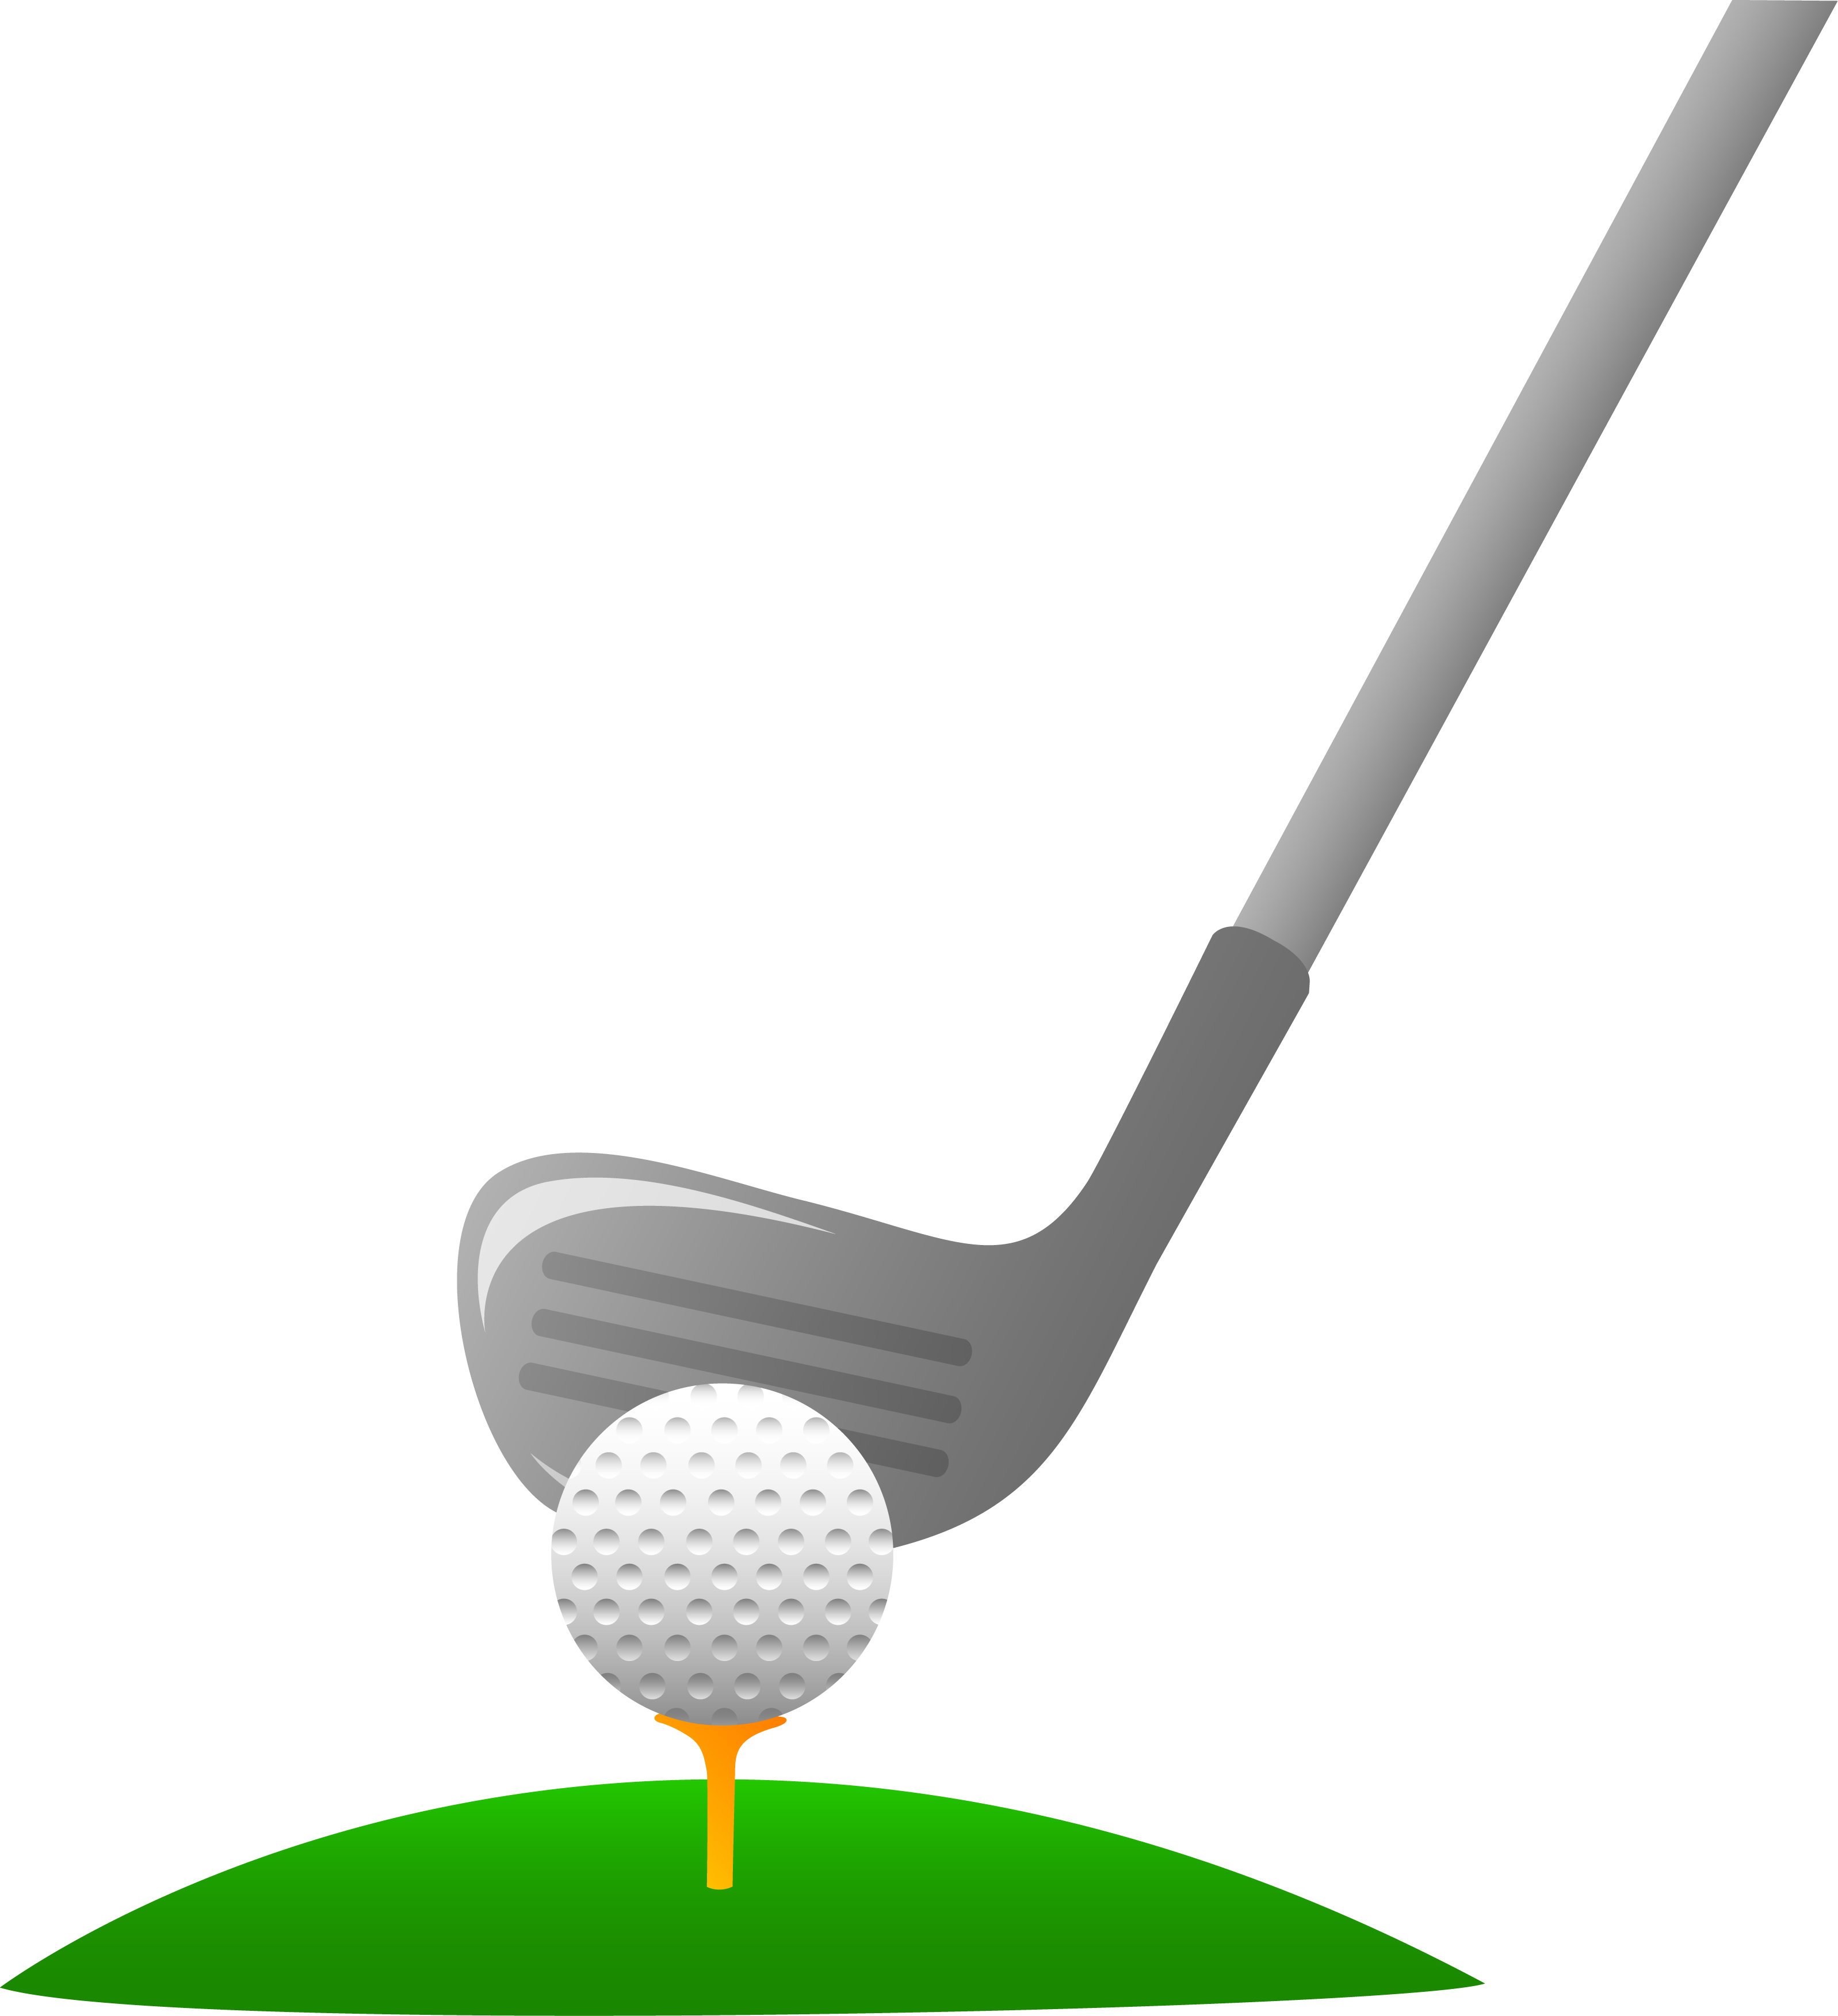 Clipart grass golf ball.  collection of high